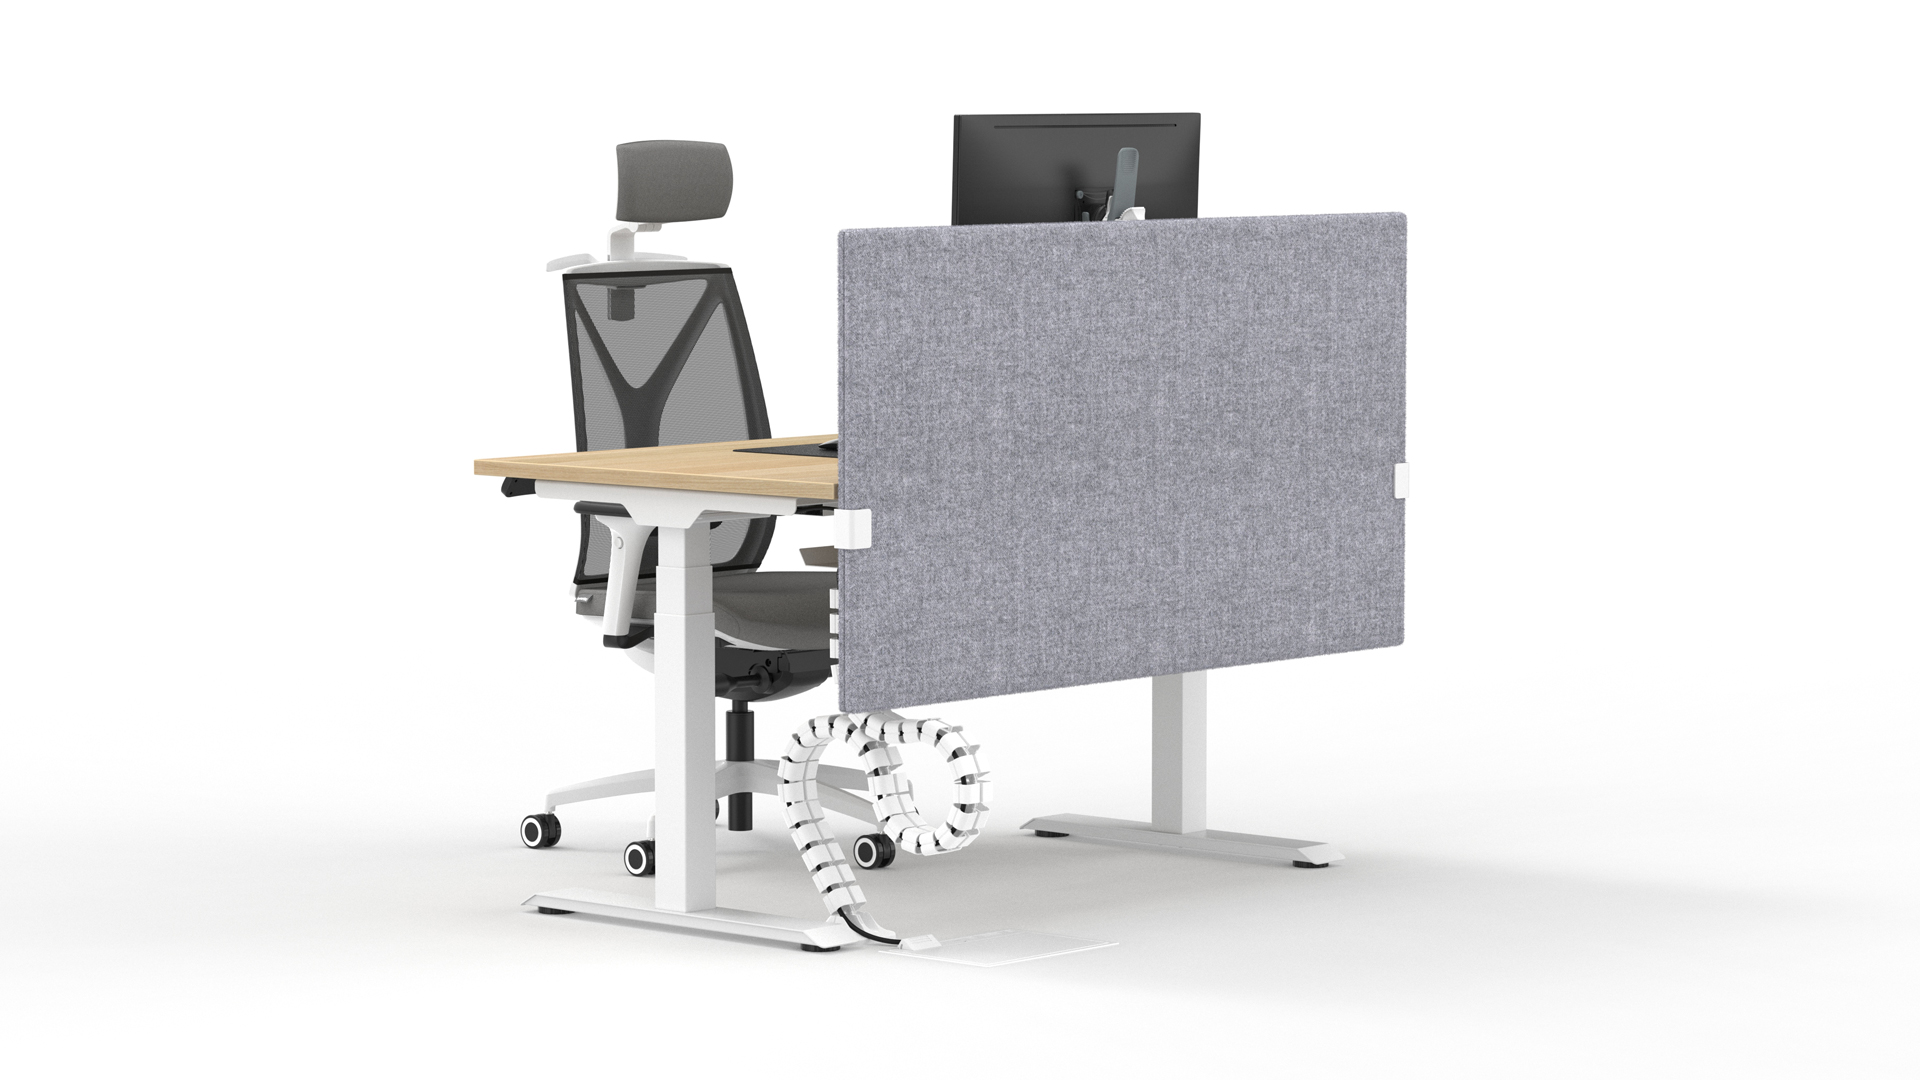 Metalicon ergonomic accessories can be colour matched to Alto 1 and Alto 2 desk frames